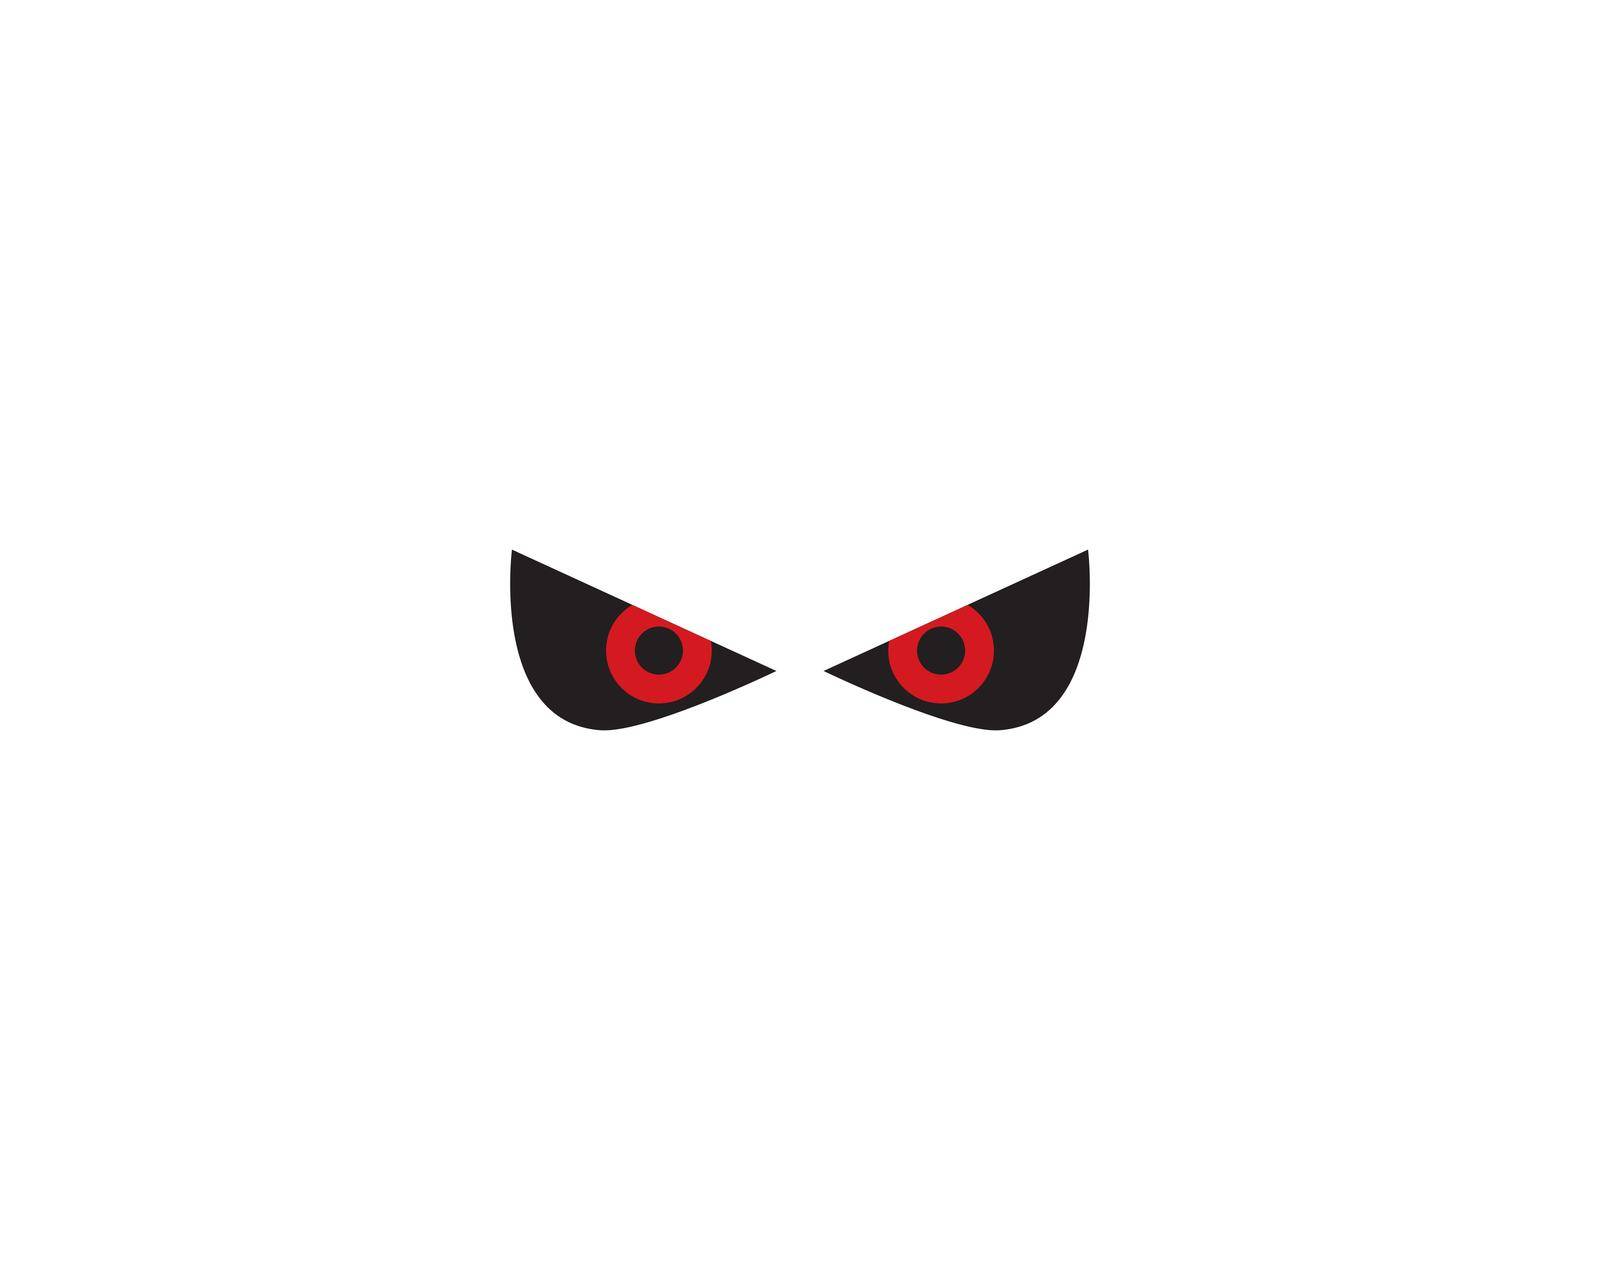 Devil Eye logo vector by awk